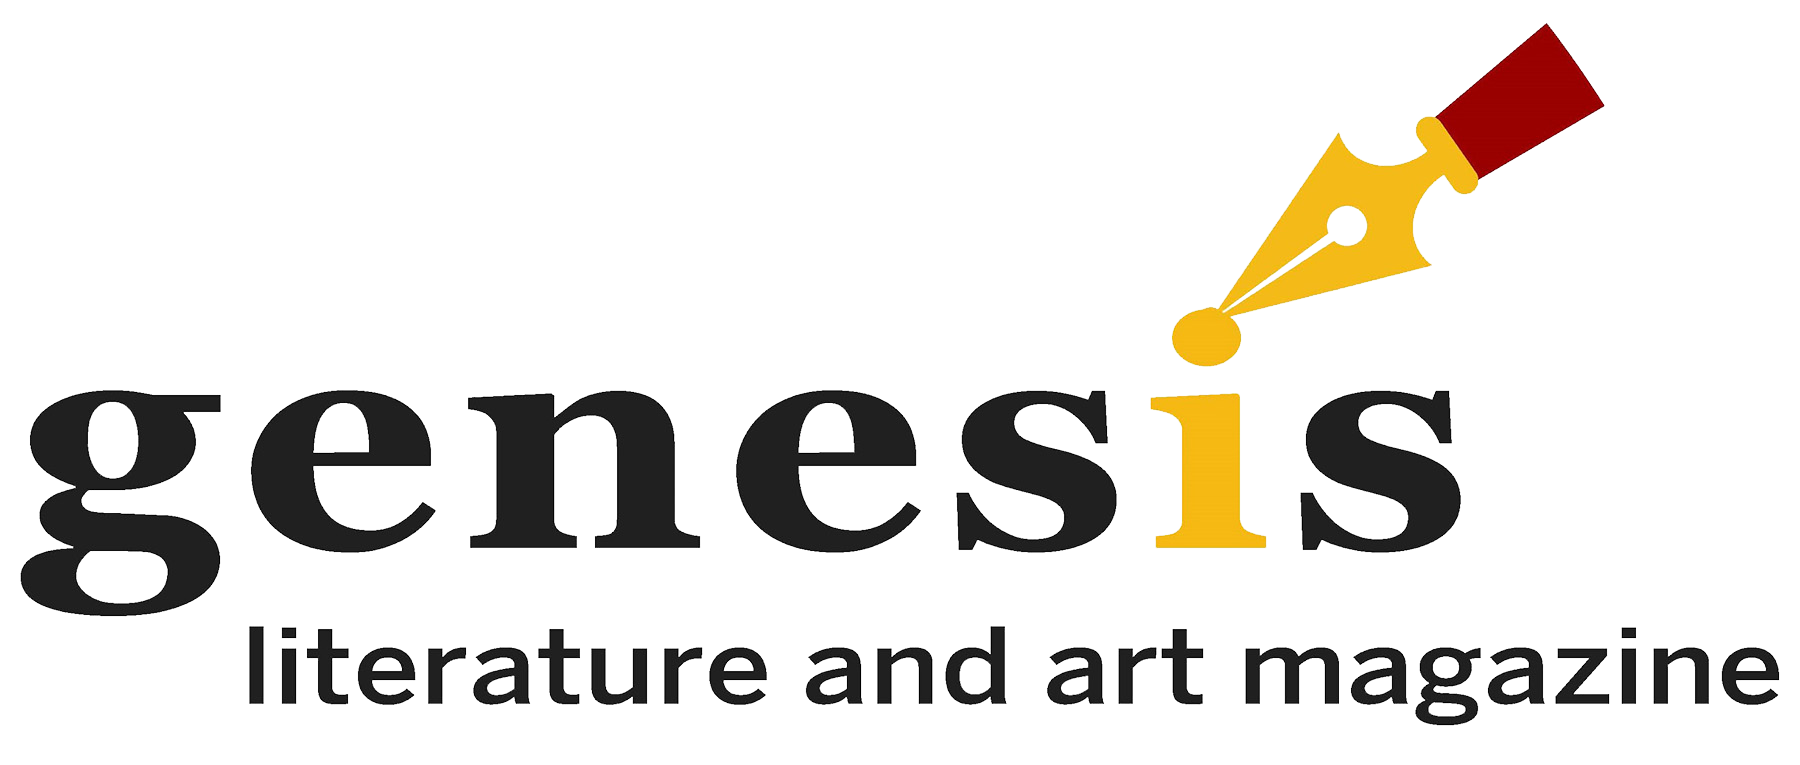 genesis literature and art magazine